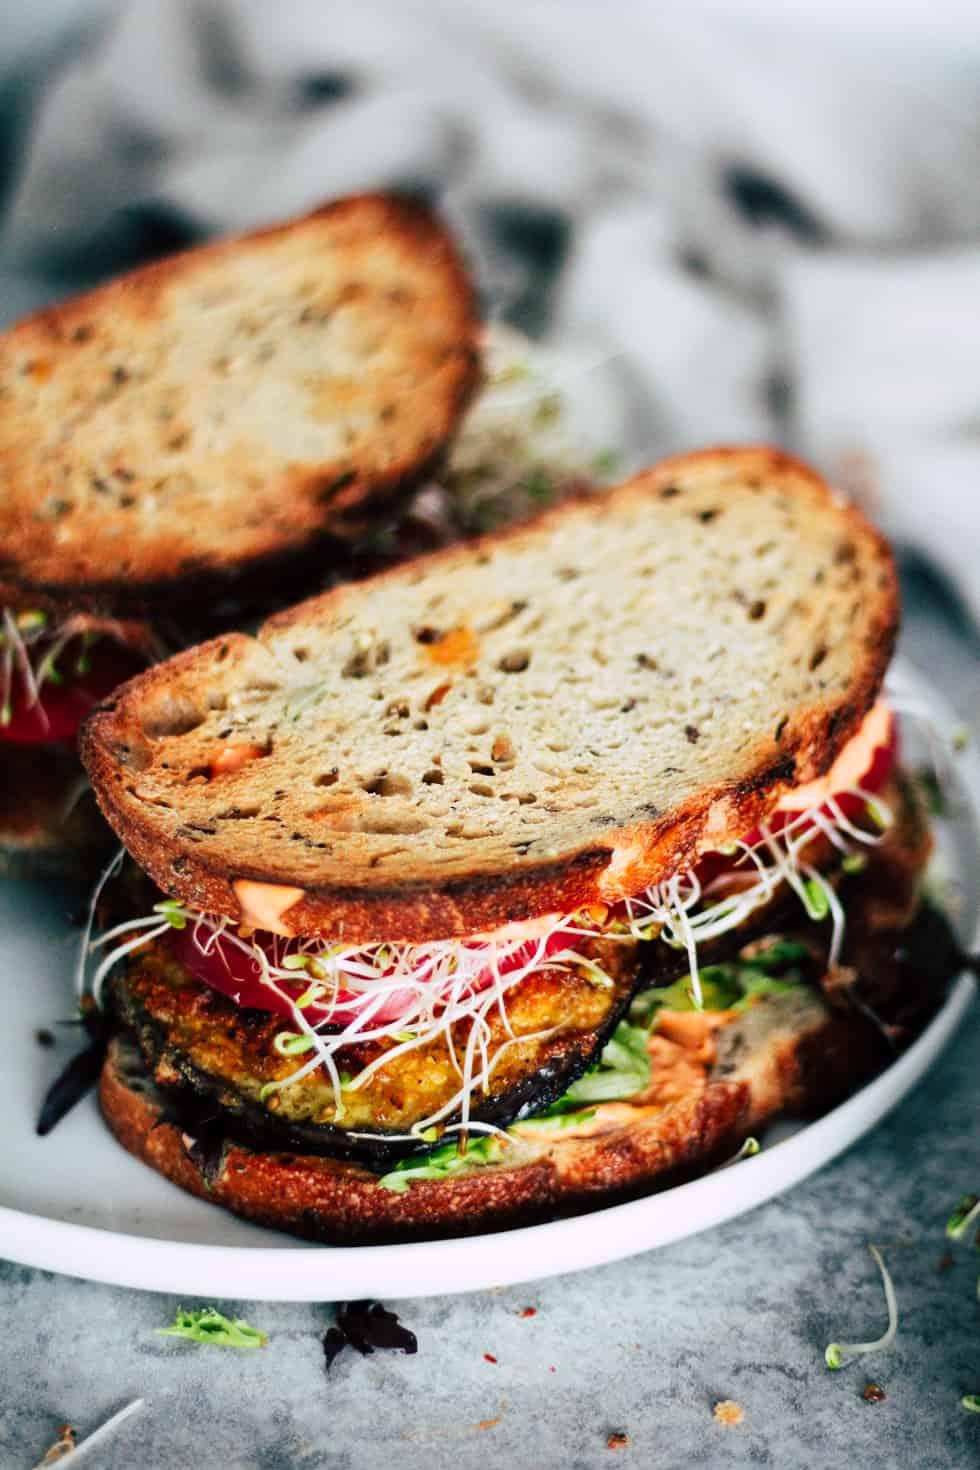  Vegetarian Eggplant BLT Sandwich with Harissa Mayo - Vegetarian Lunch Ideas